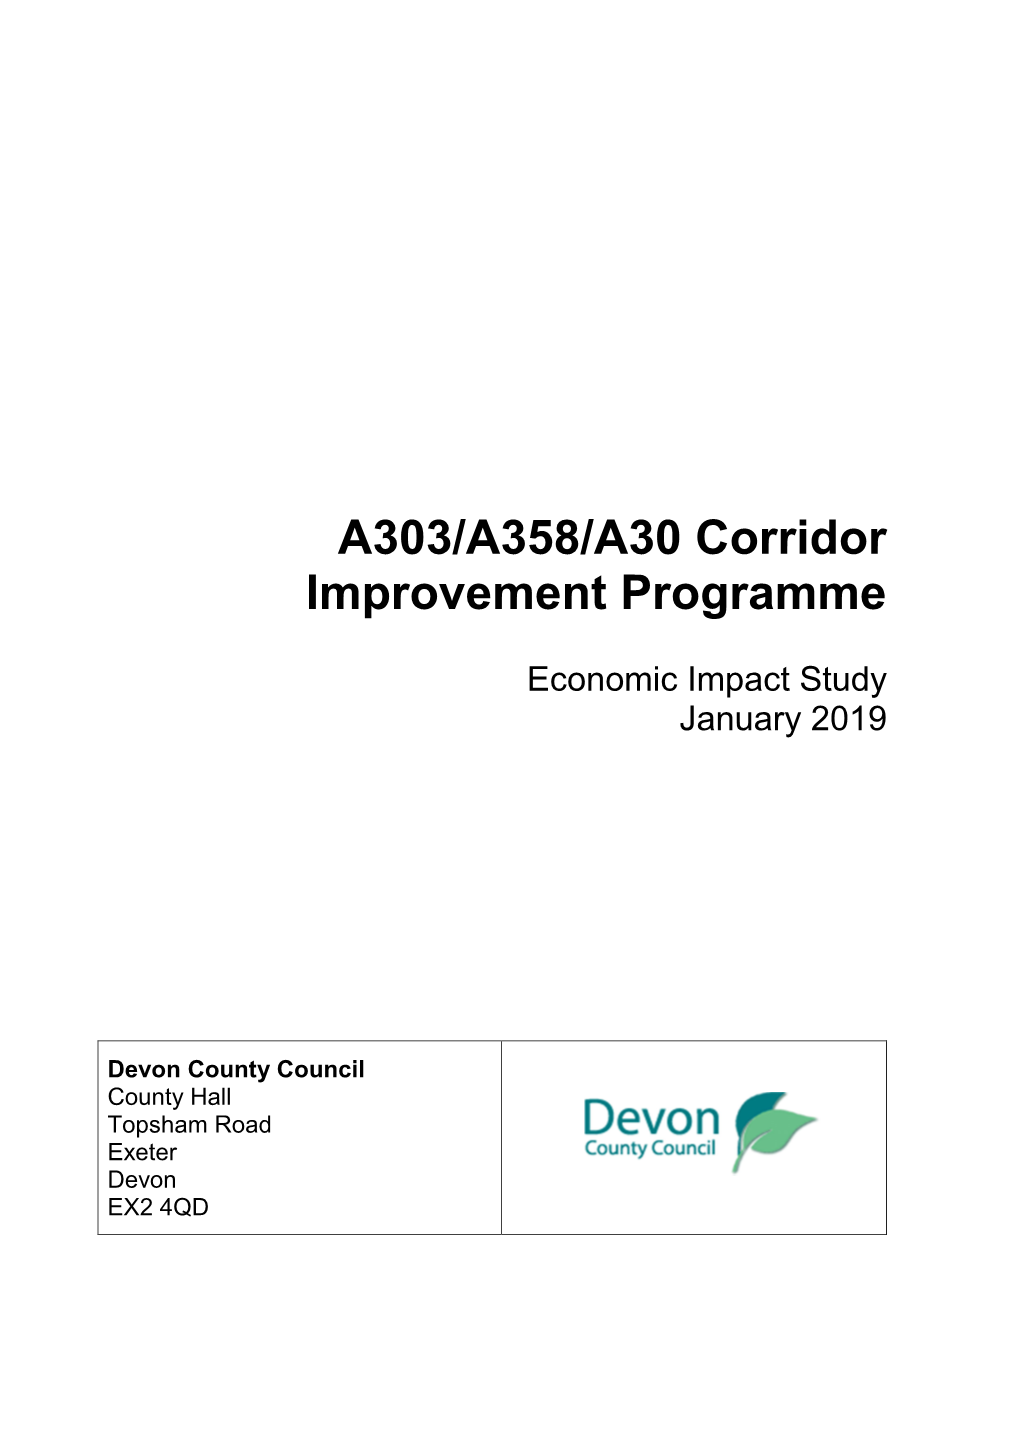 A303/A358/A30 Corridor Improvement Programme